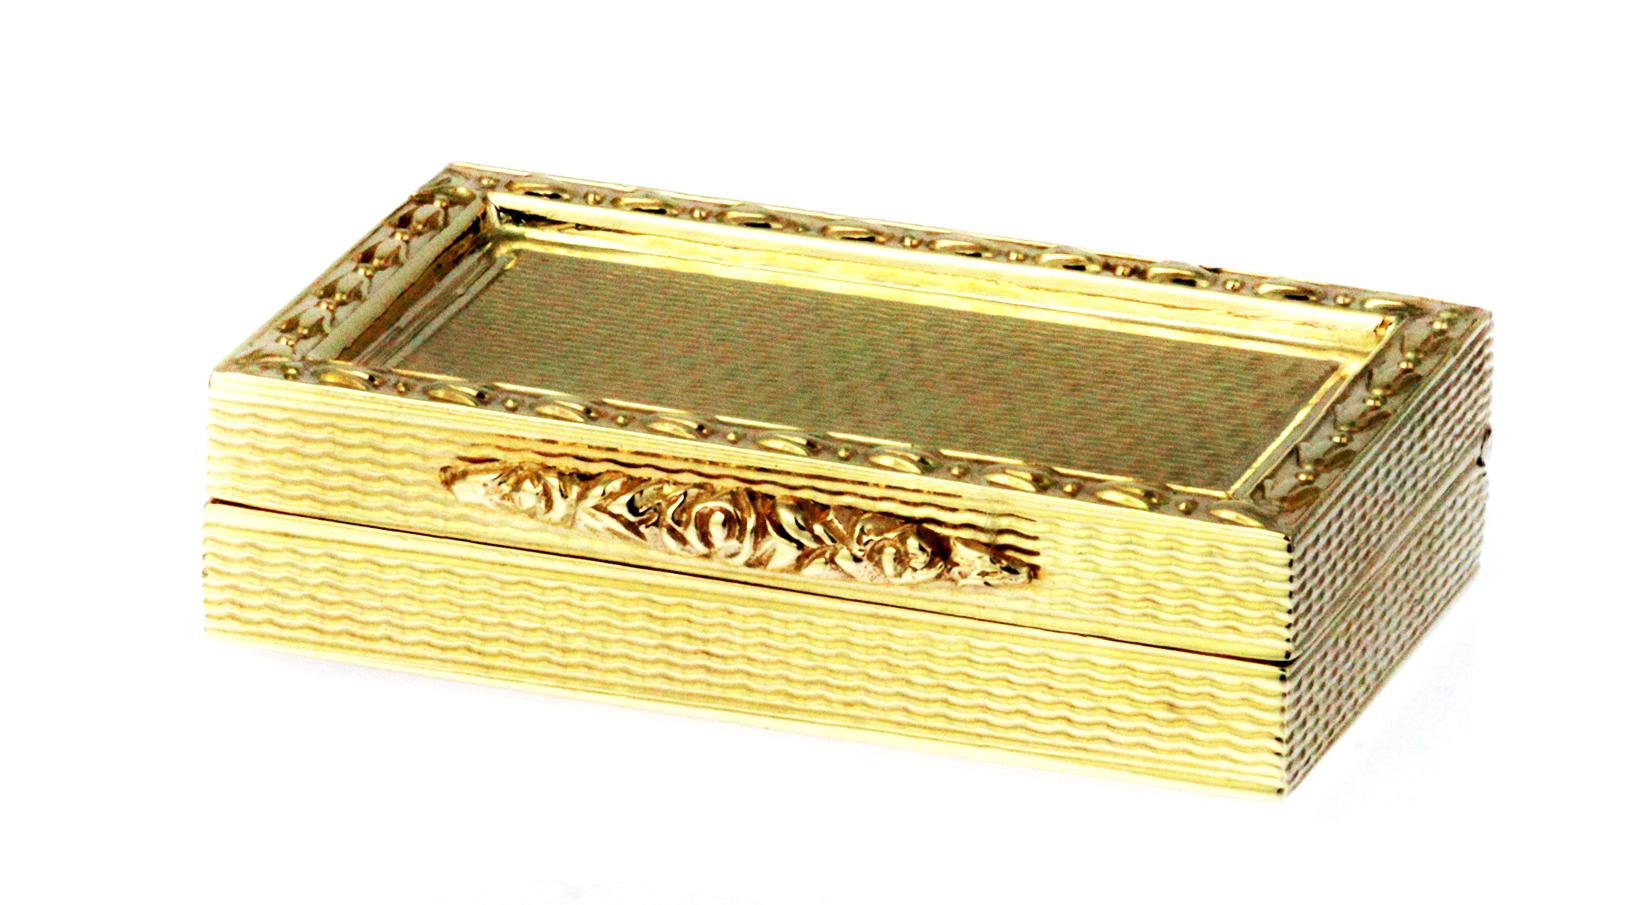 Edwardian Vintage Pill/Snuff Box in 9 Carat Yellow Gold, British Hallmarked 1965